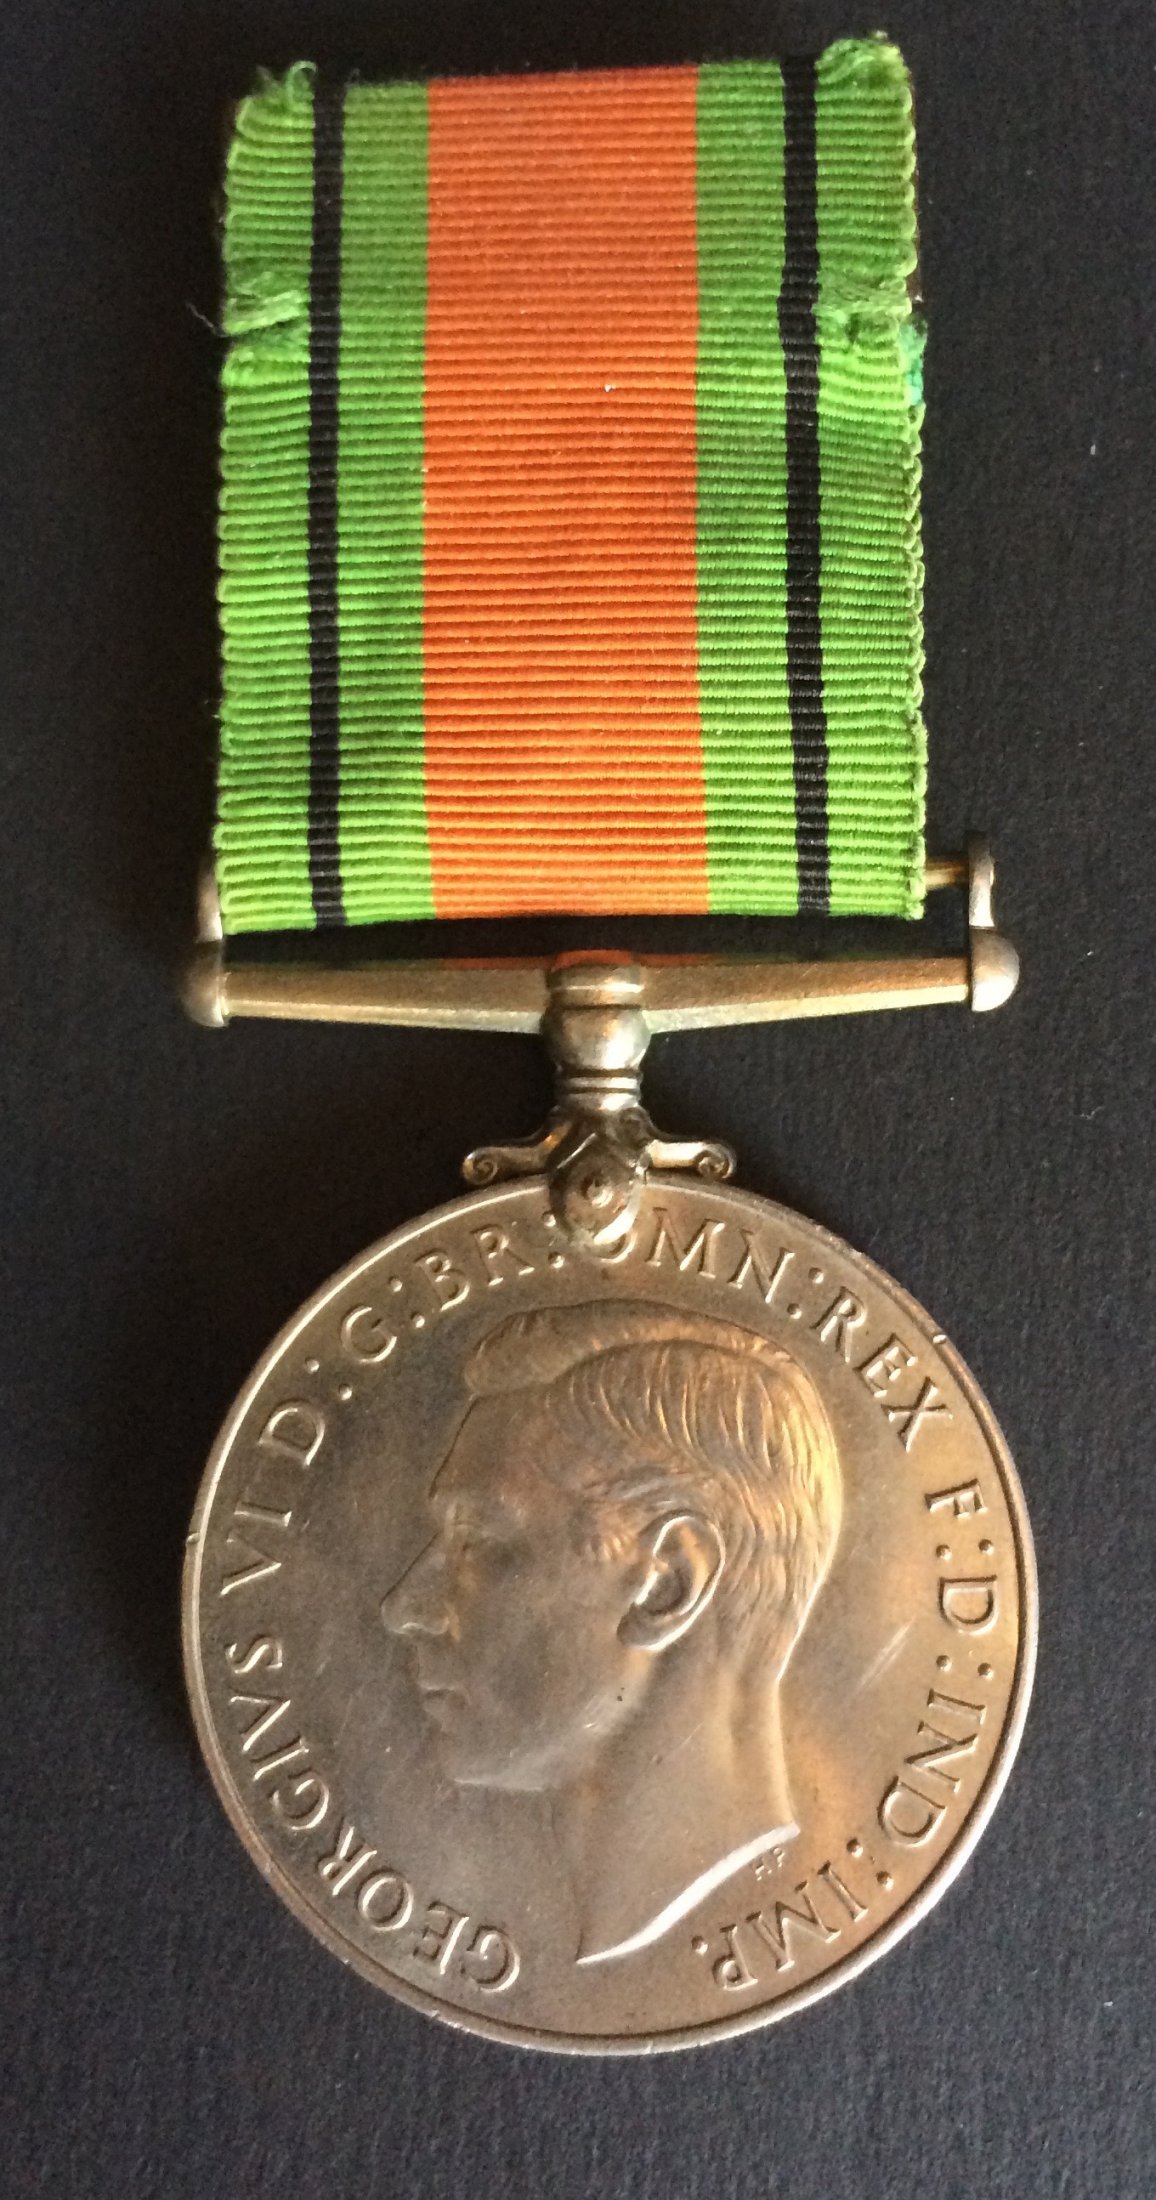 Khazan Singh Johl is Awarded the King George V Medal. Courtesy of the Johl Family.